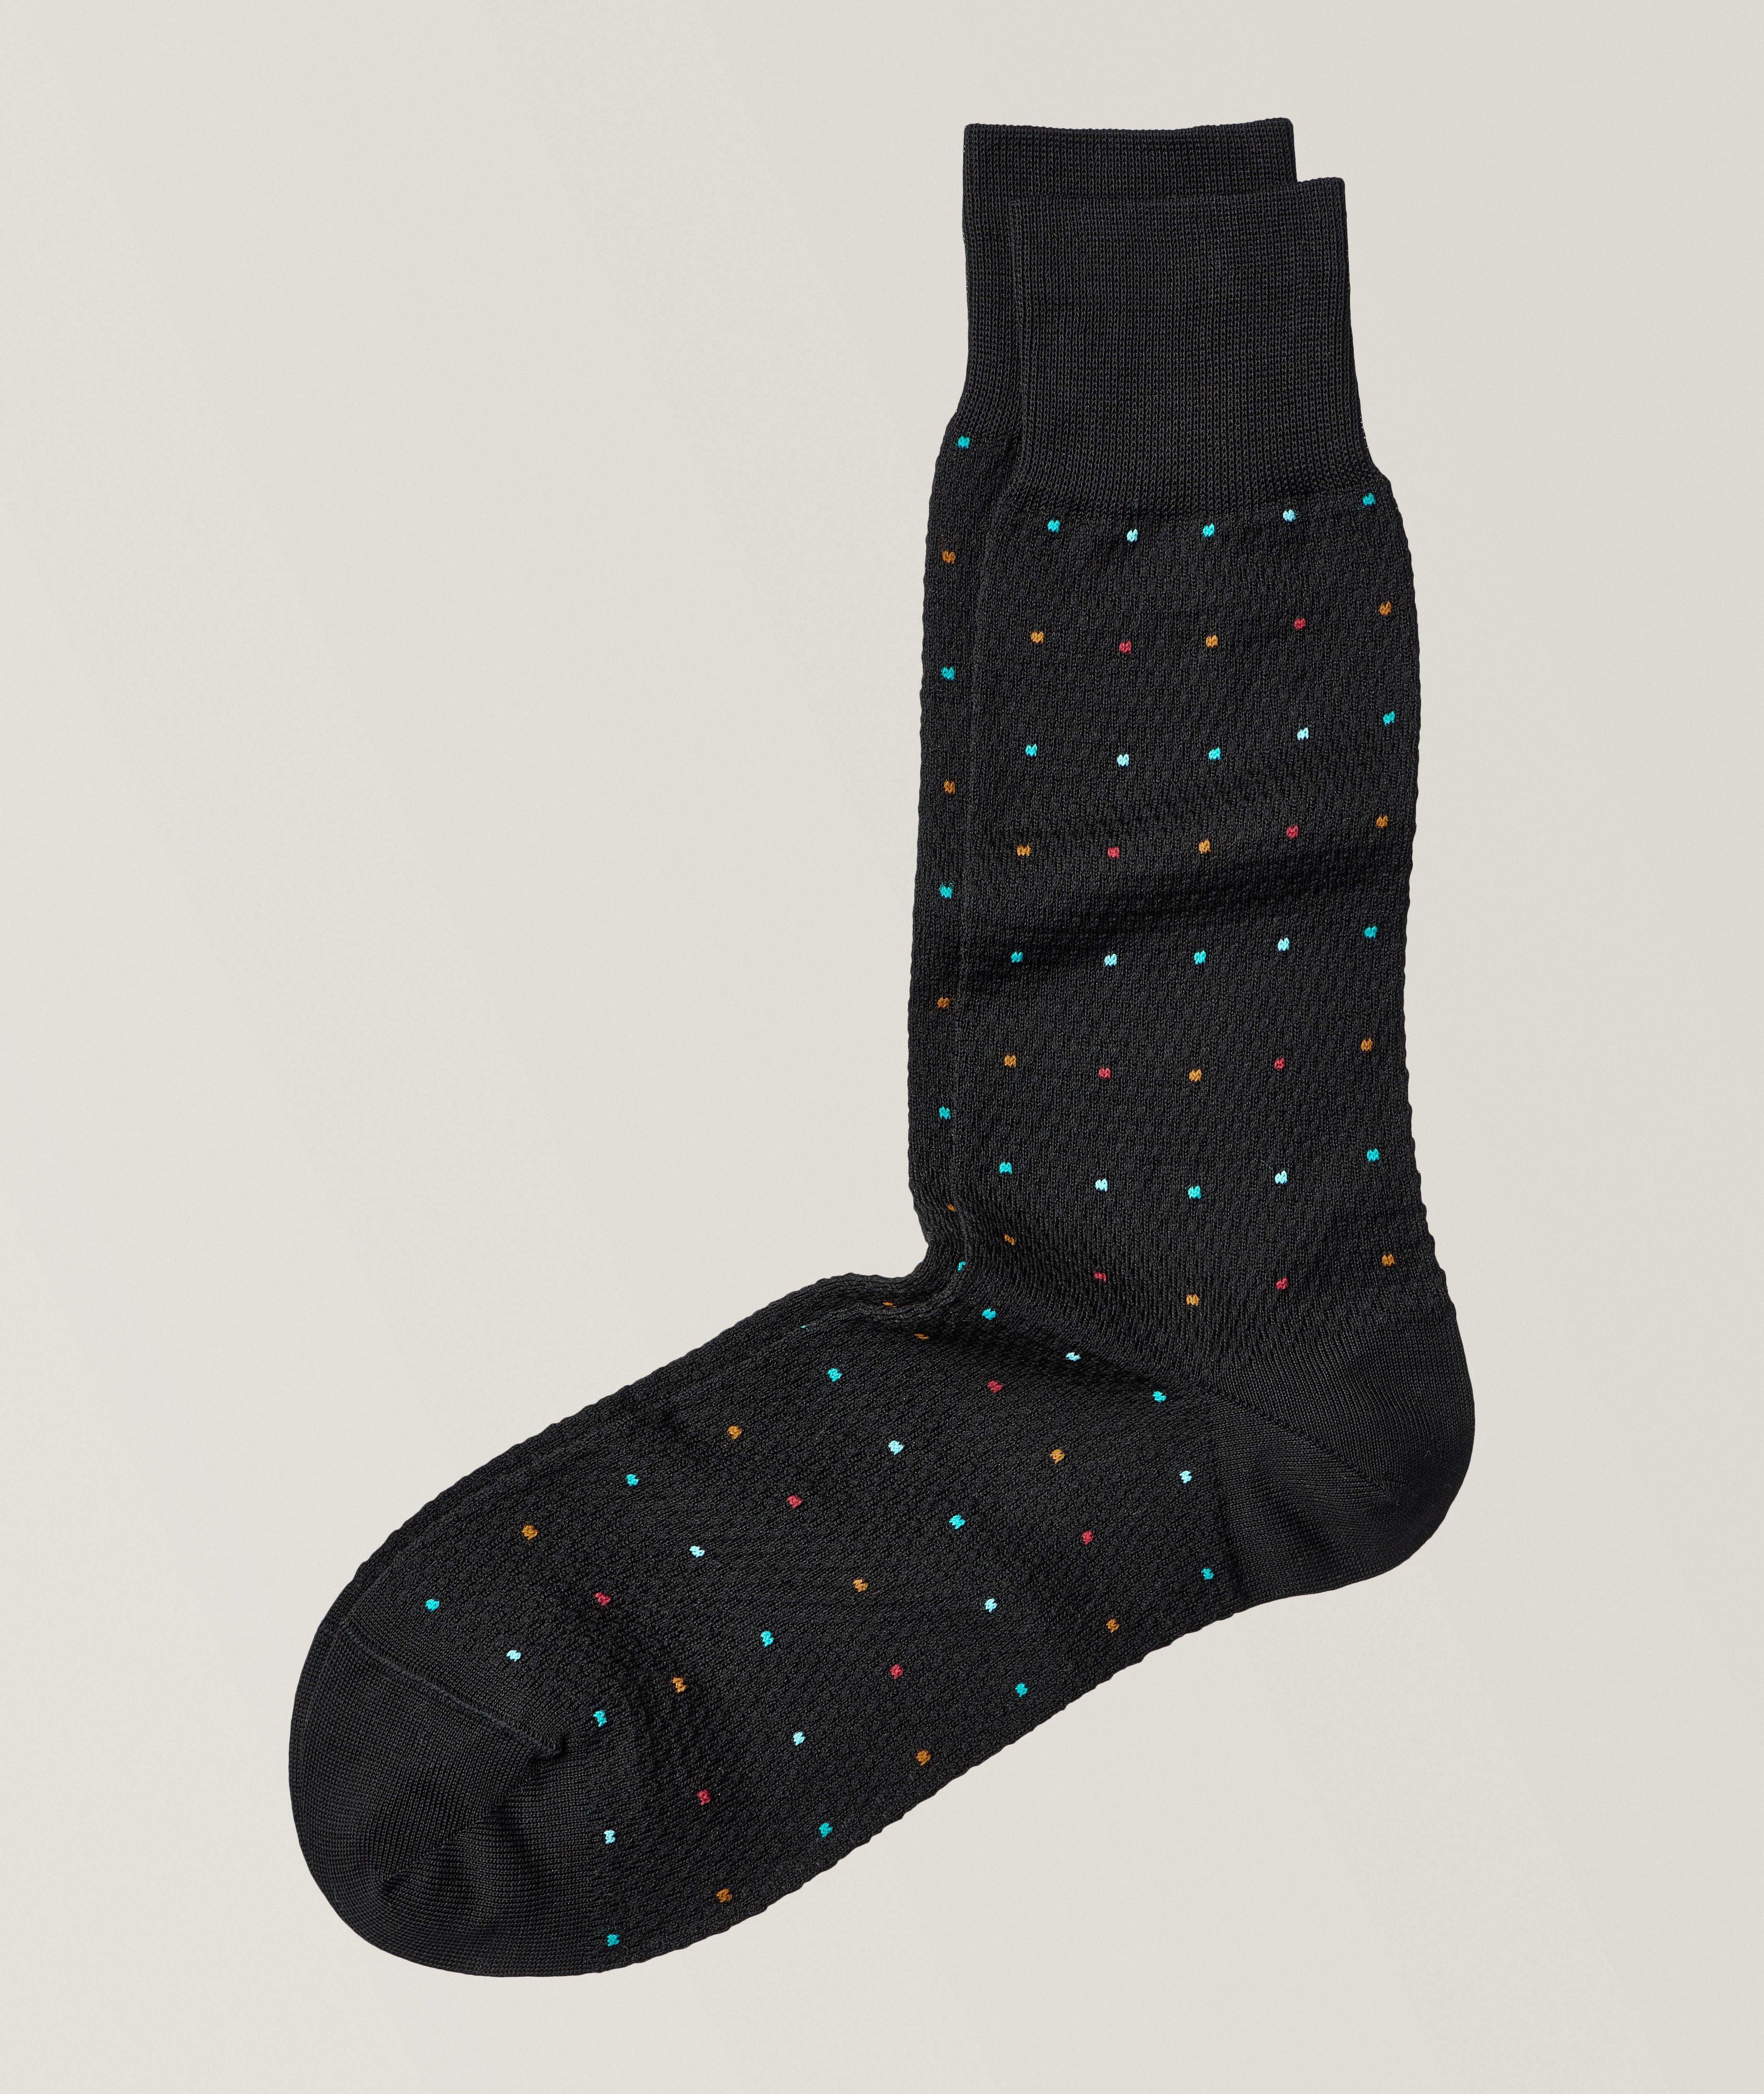 Filippo Dot Cotton-Blend Dress Socks  image 0